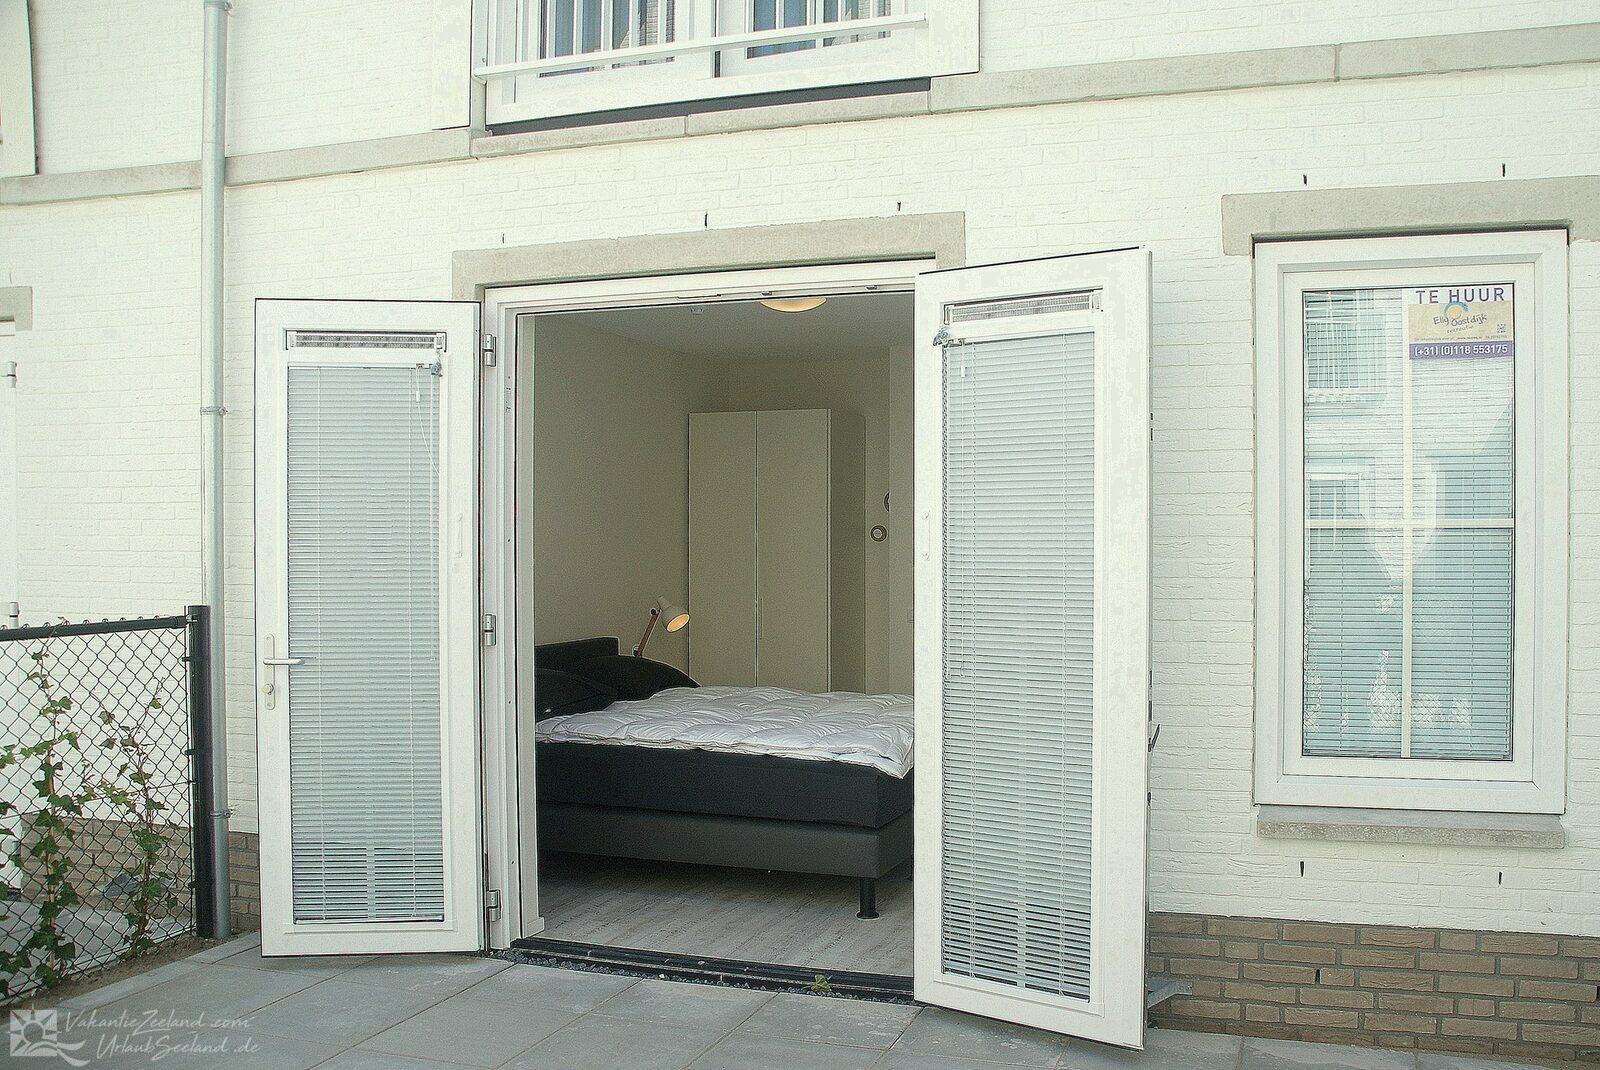 VZ904 Vakantieappartement in Koudekerke Dishoek